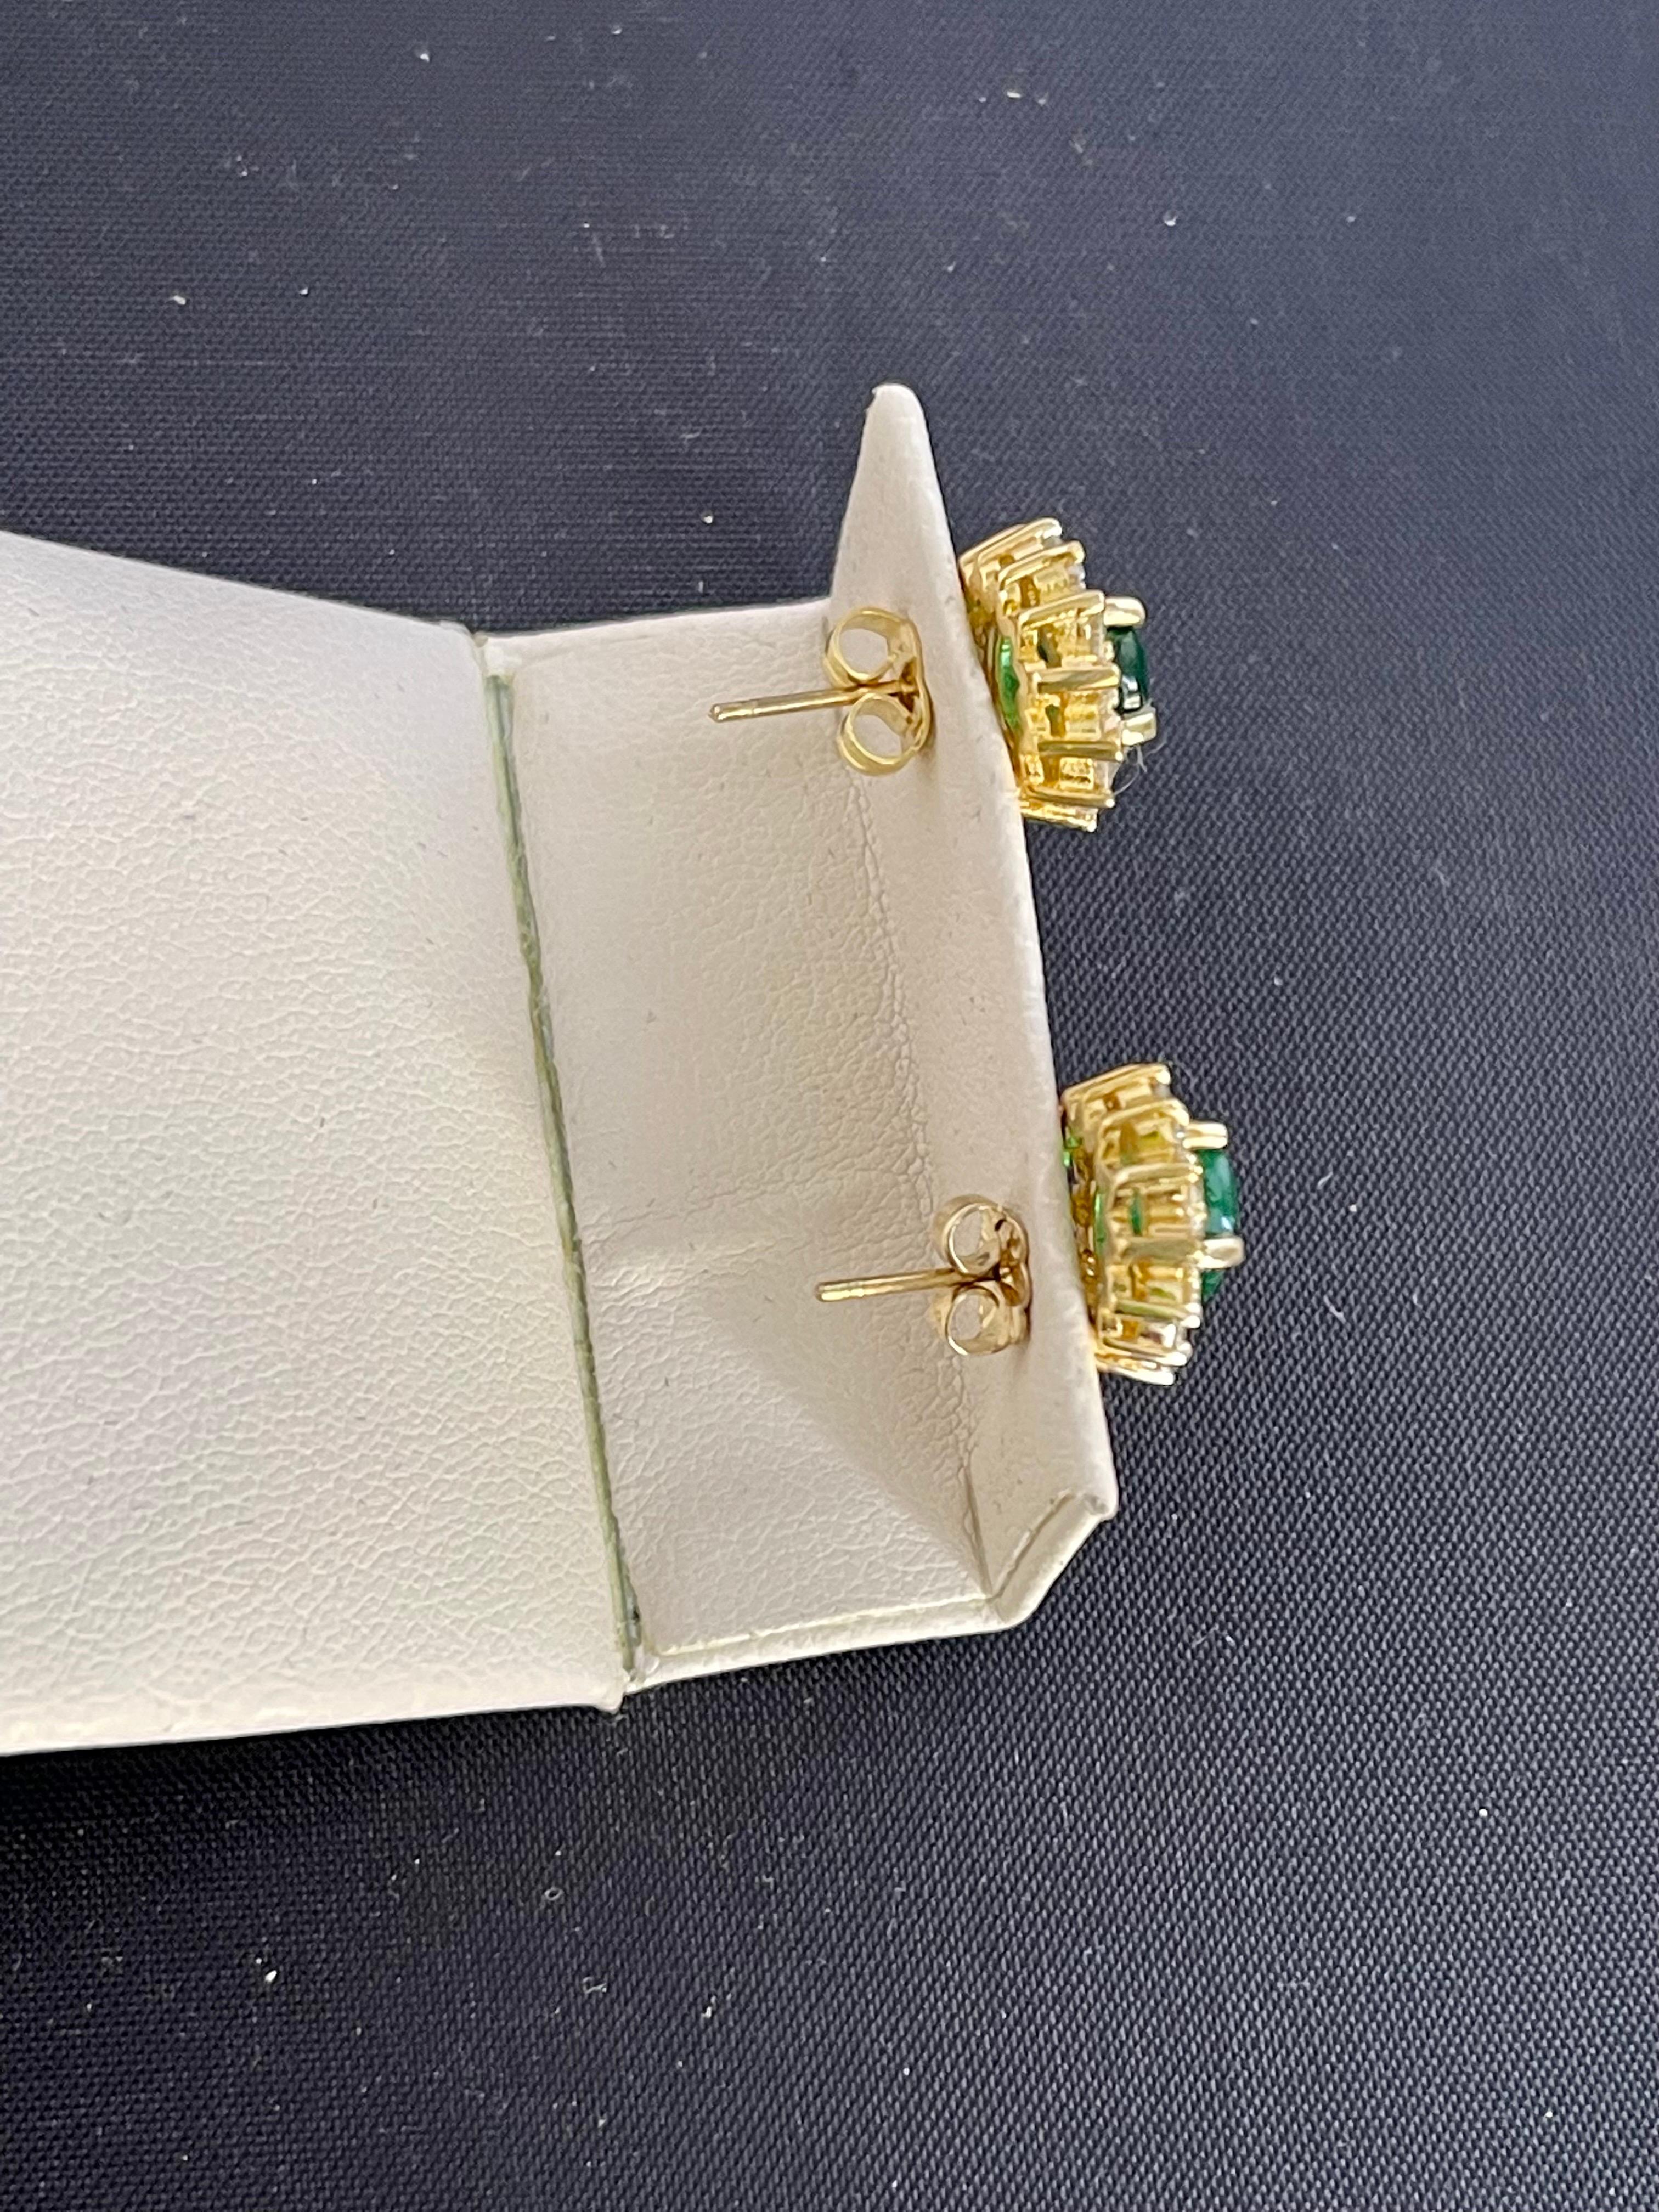 4 Ct Oval Shape Emerald & 1.5 Ct Diamond Post Back Earrings 14 Karat Yellow Gold For Sale 4